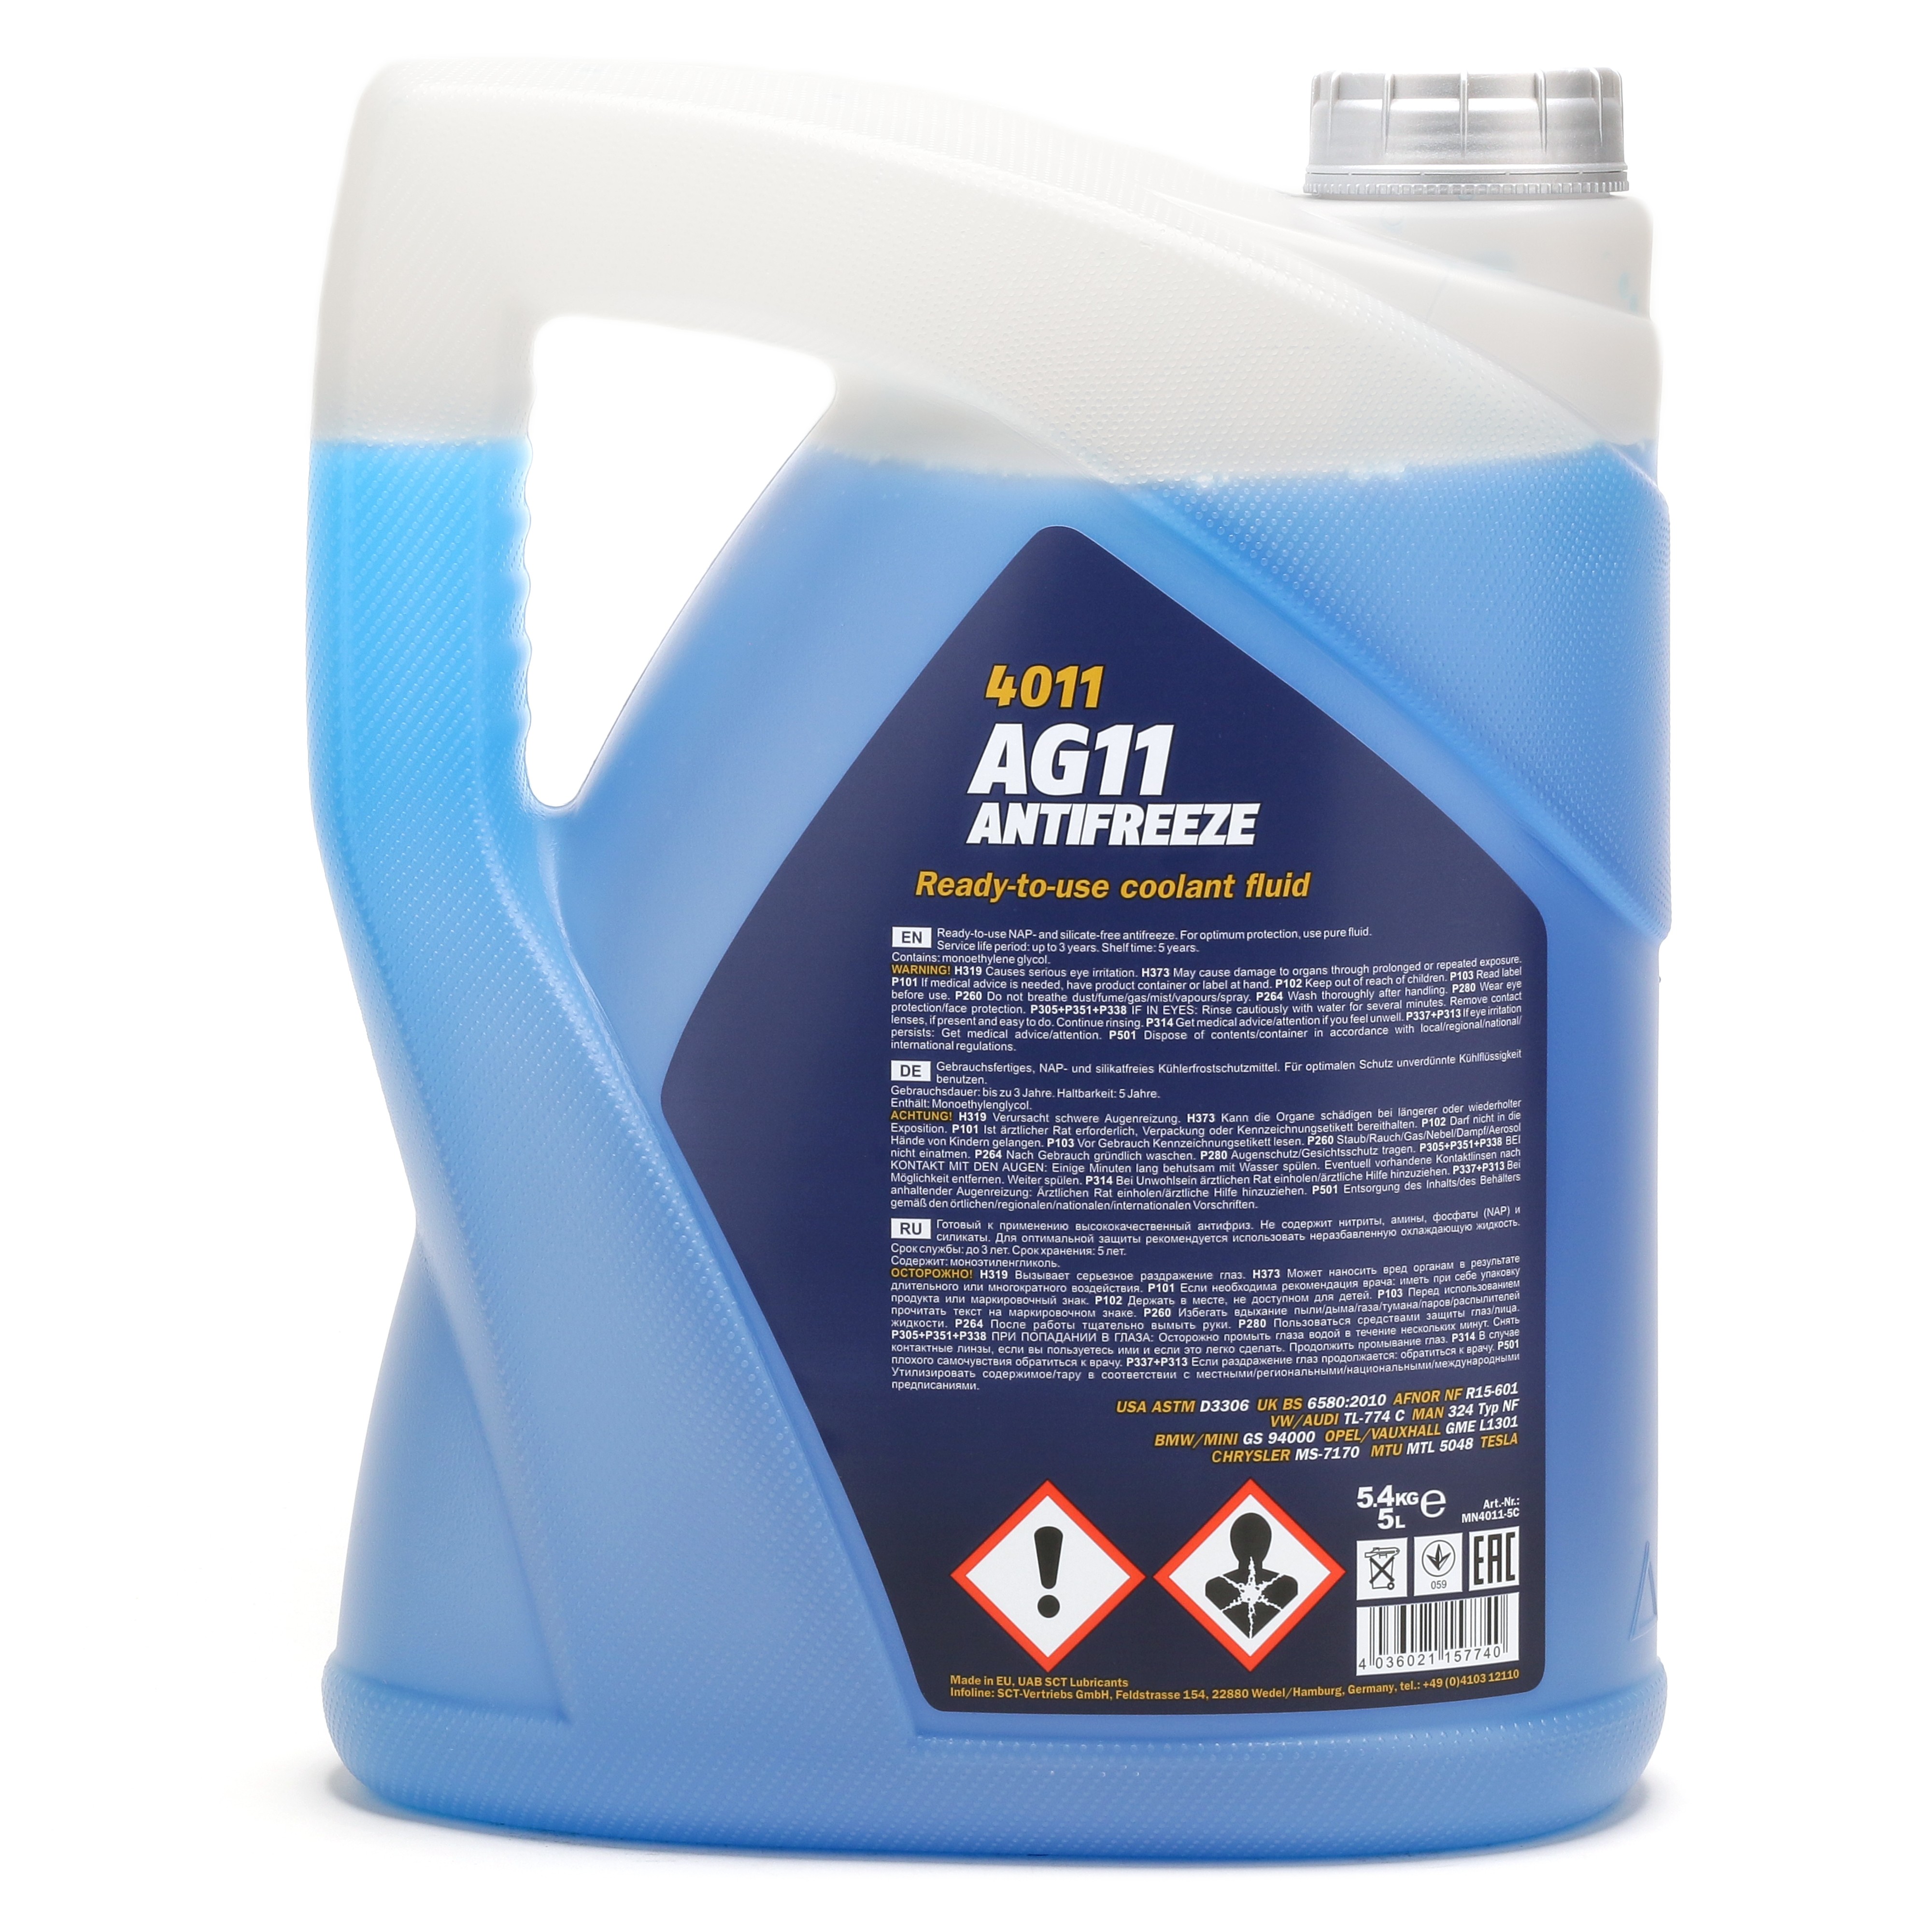 Mannol 4011 Kühlerfrostschutz Antifreeze AG11 Longterm -40 Fertigmischung 5 Liter